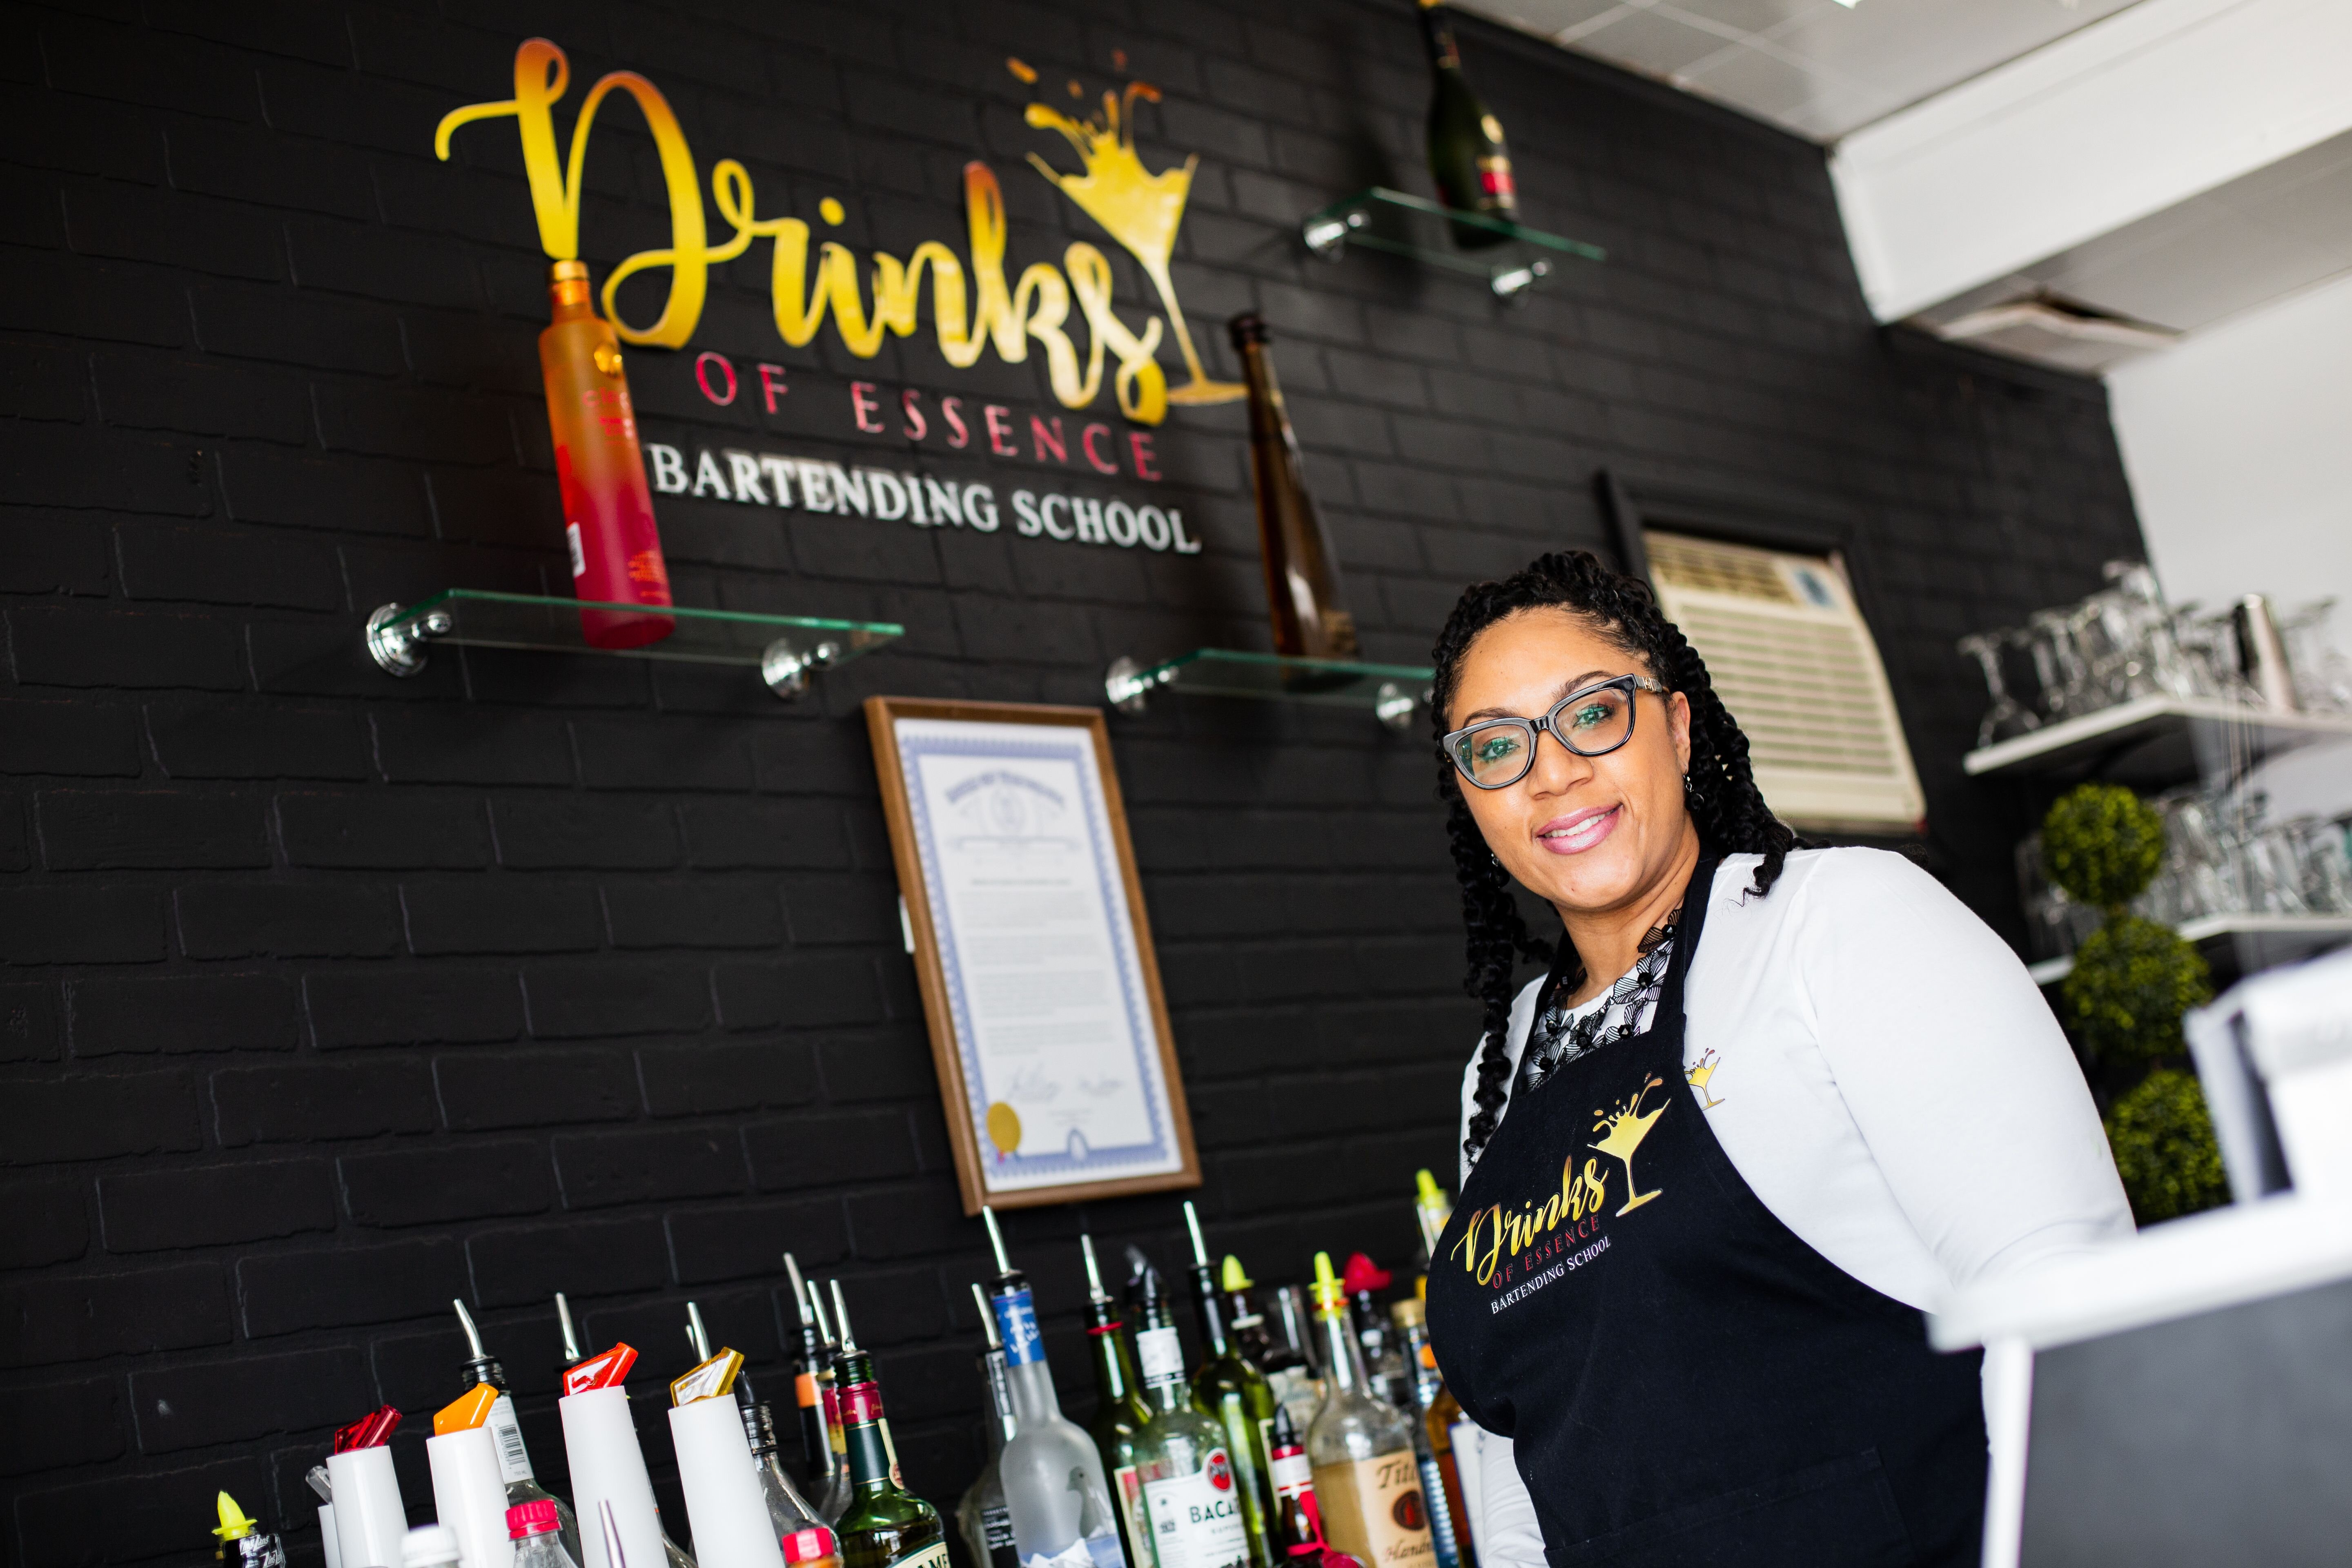 Flint native Sheena Harrison is teaching the art of mixology as the owner of Drinks of Essence Bartending School.